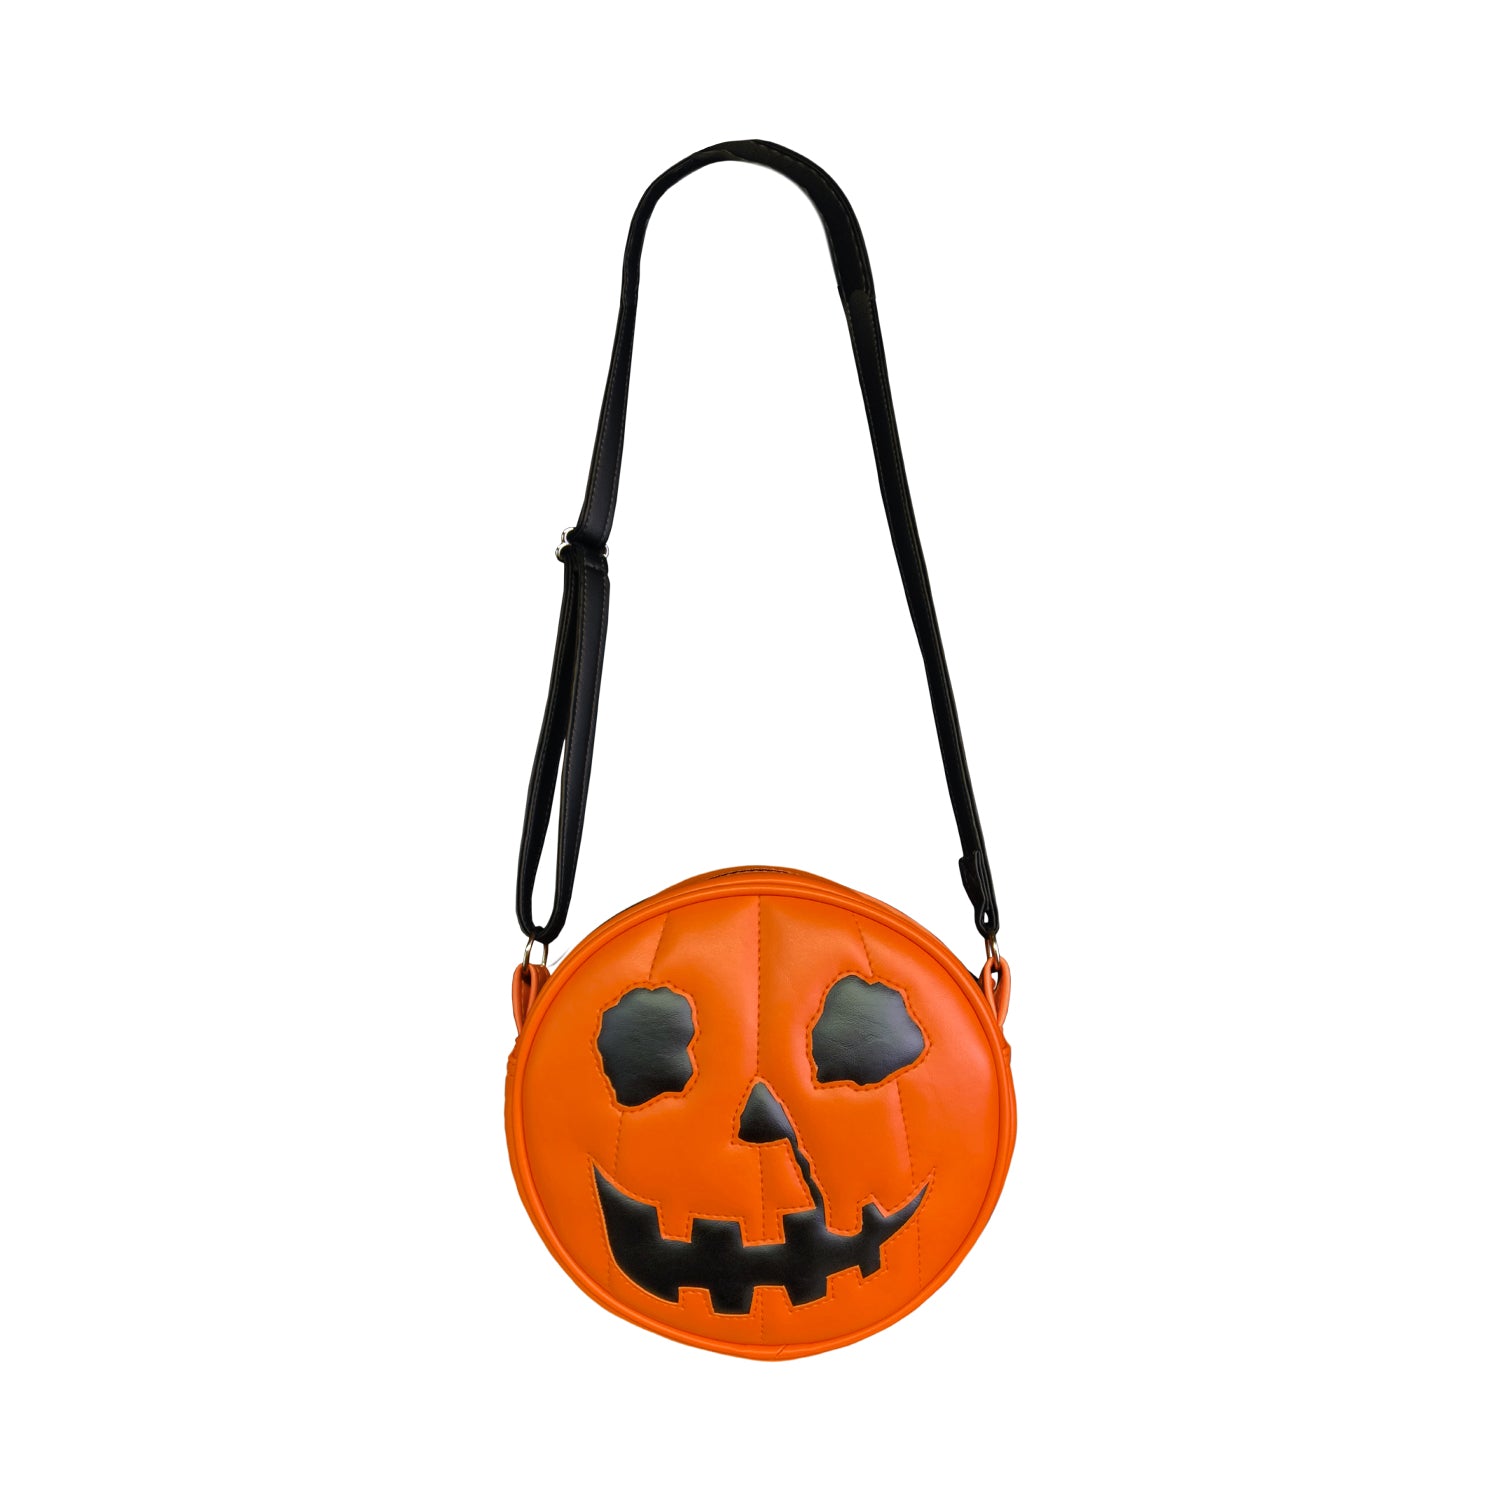 10 Easy DIY Halloween Treat Bags for Kids to Make | Halloween treat bags  diy, Halloween bags, Diy halloween activities